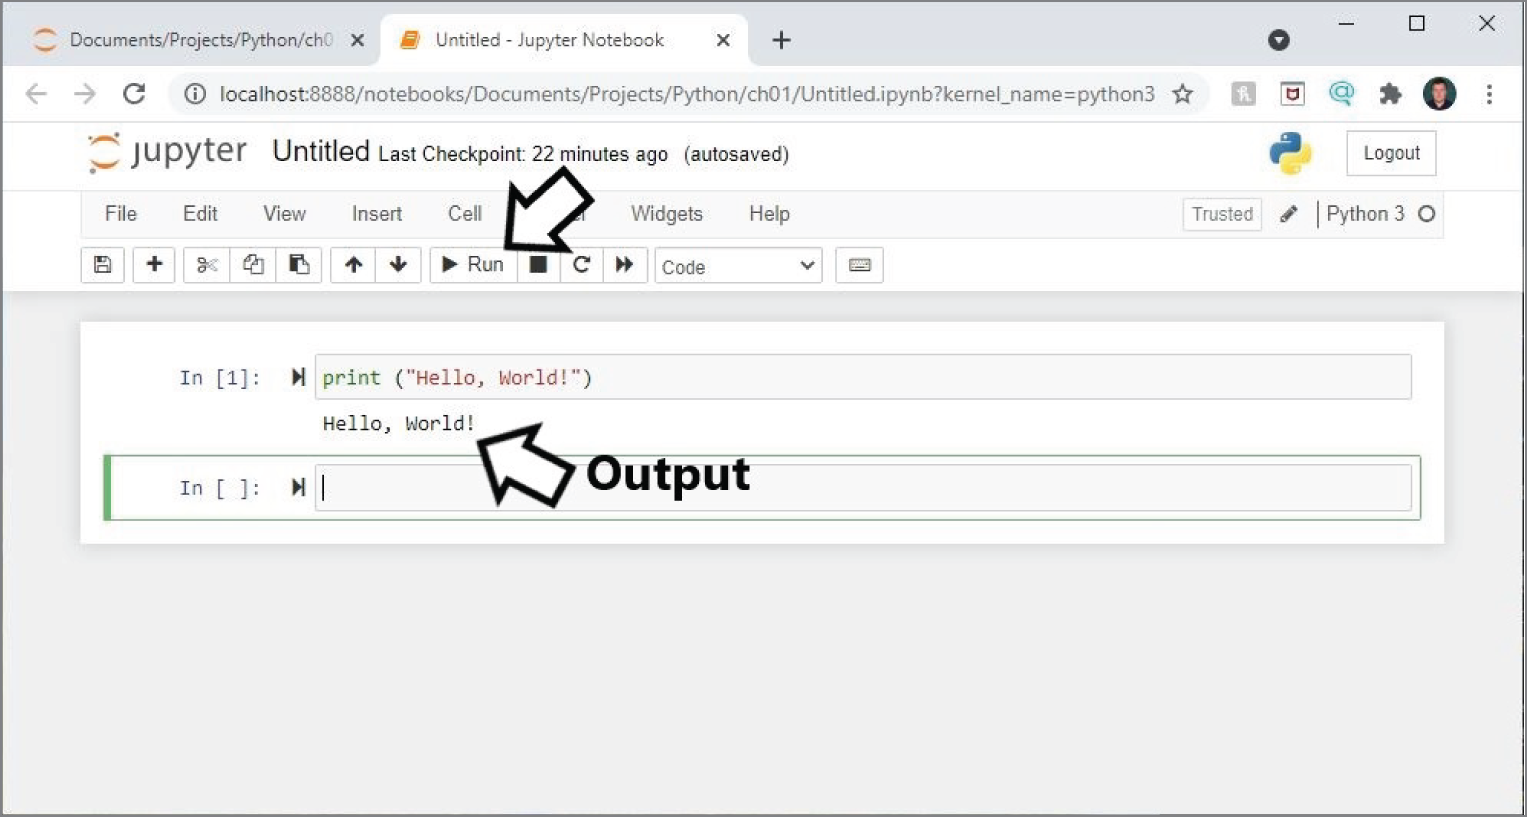 Snapshot of running a Python script in Jupyter Notebook